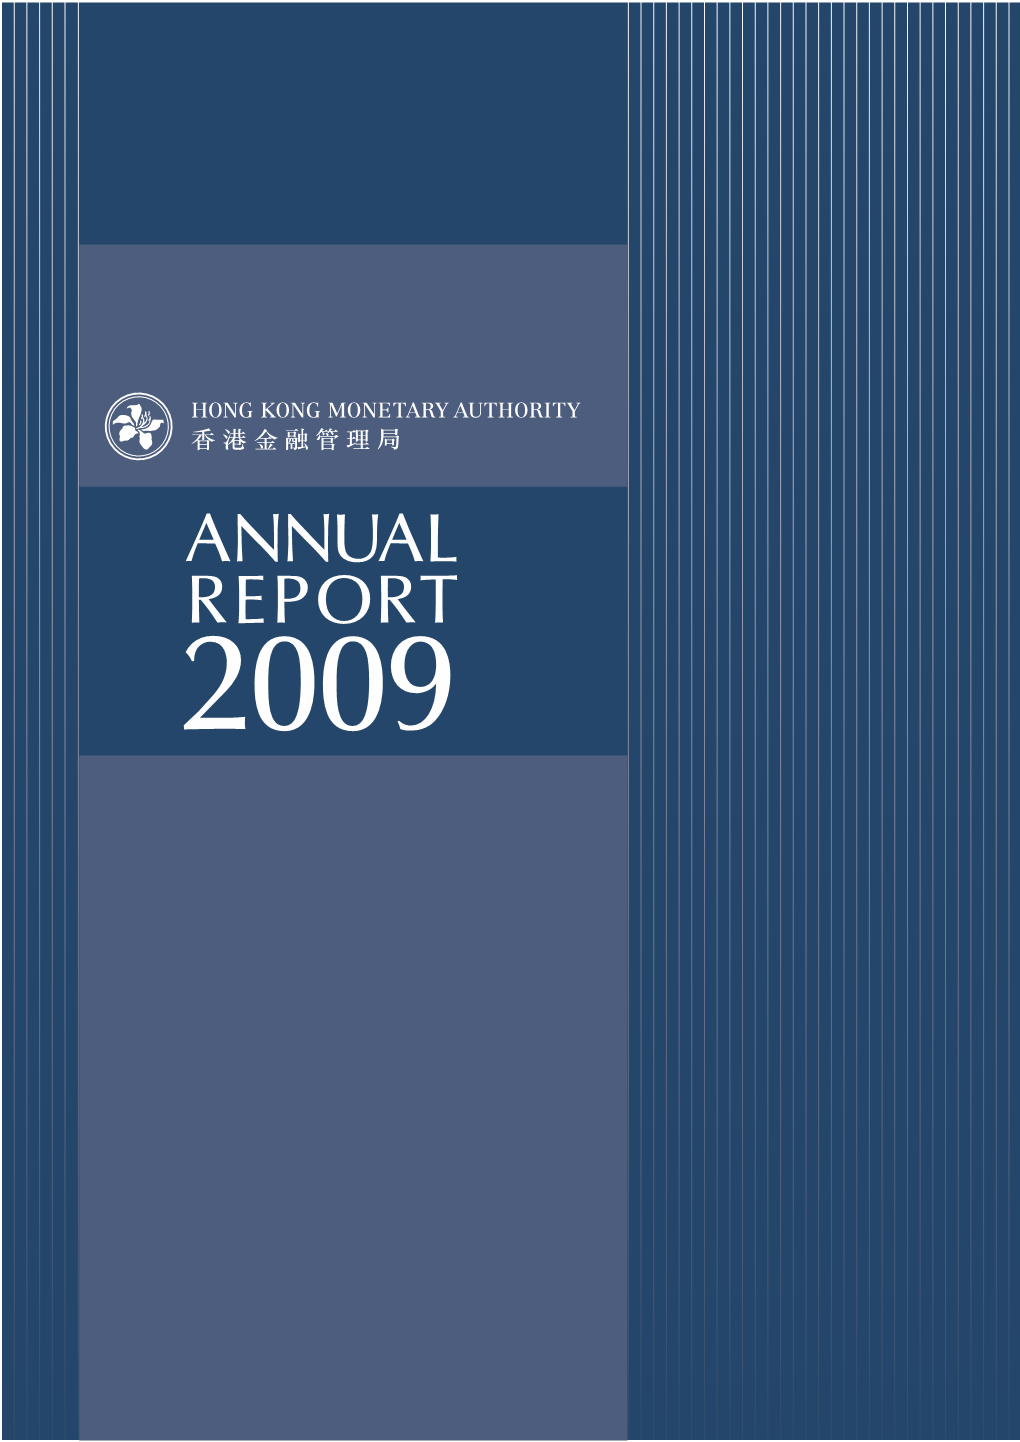 Hong Kong Monetary Authority Annual Report 2009